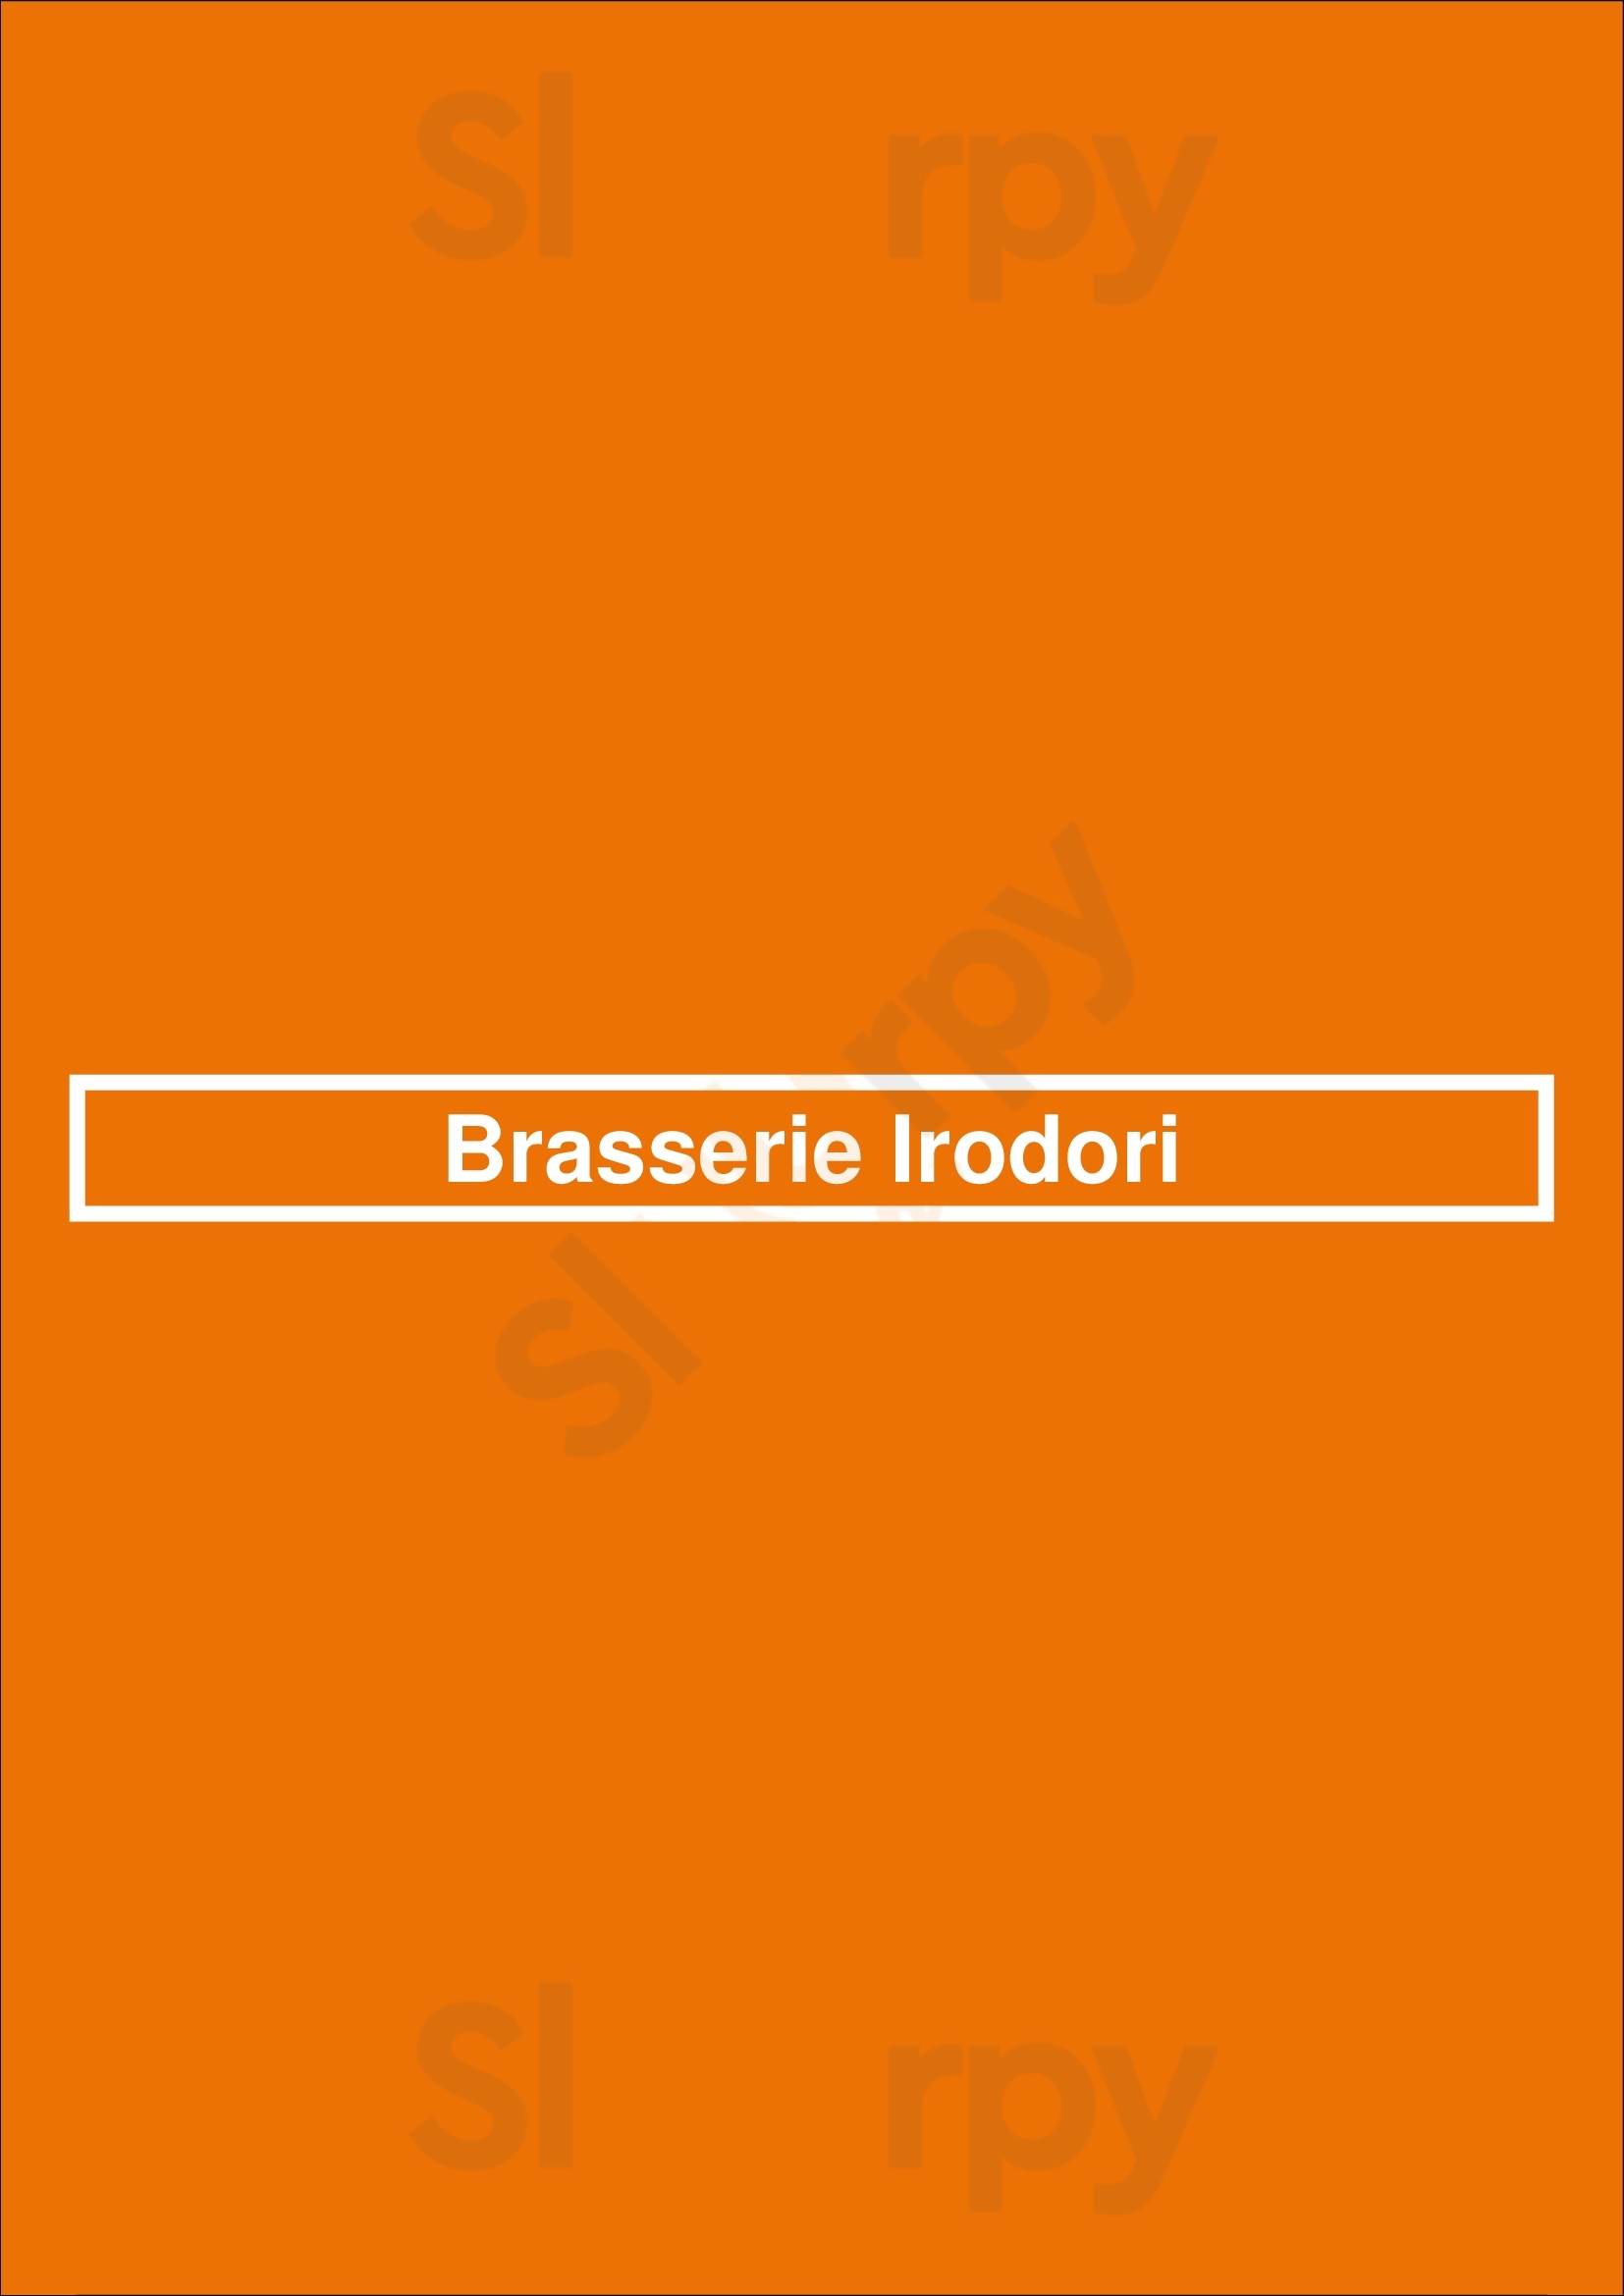 Brasserie Irodori Adelaide Menu - 1